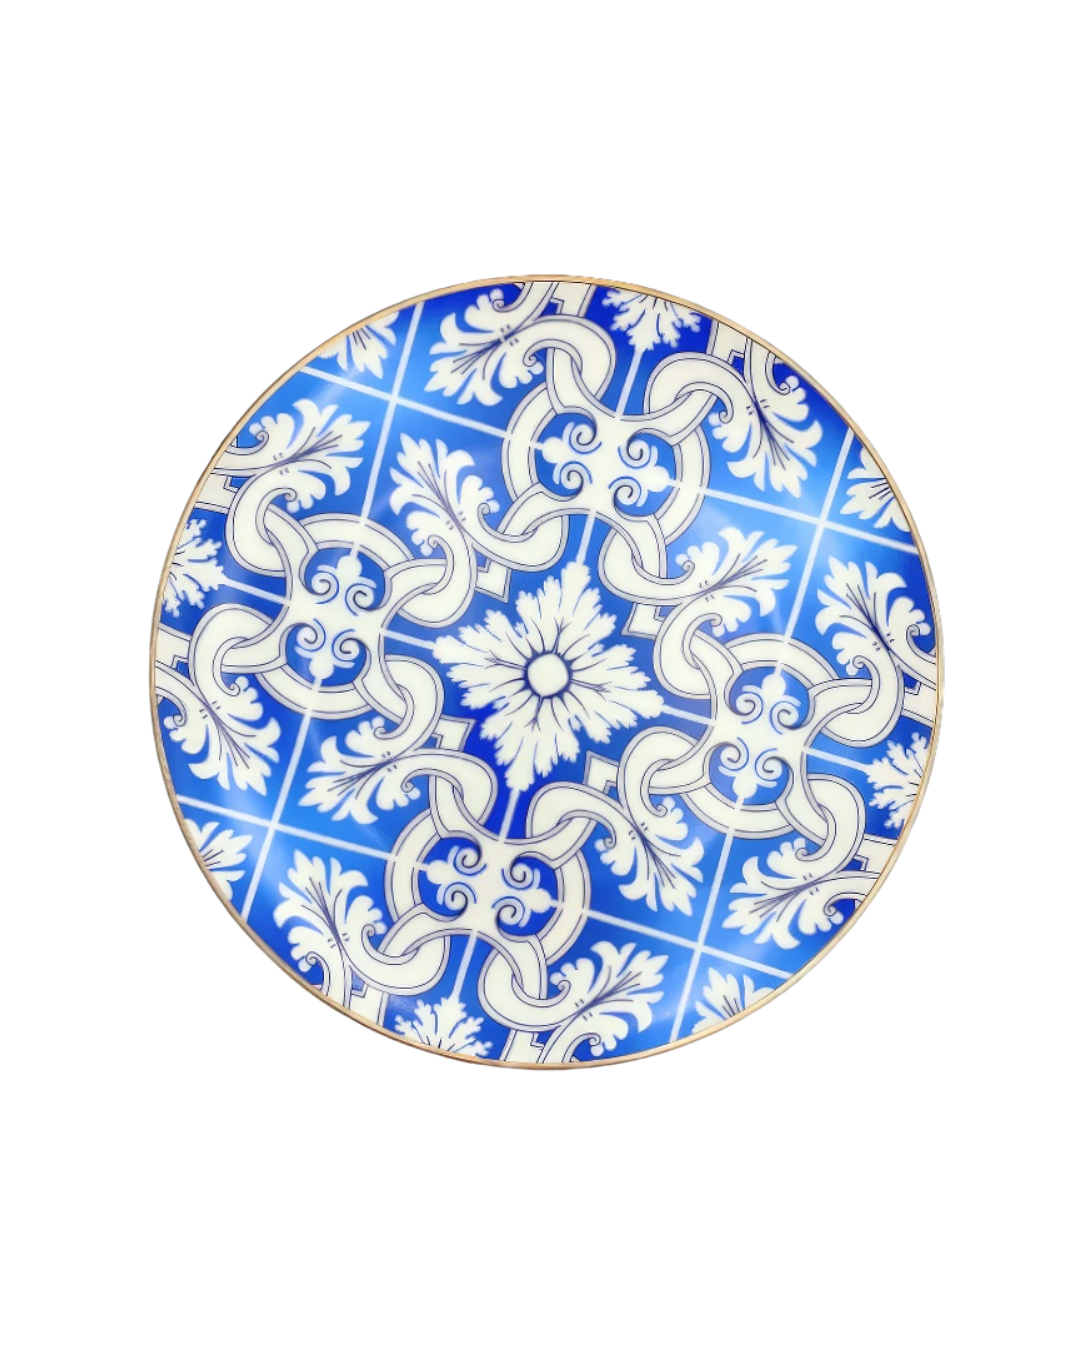 Klassisk siciliansk mattallrik - prisbelönt keramisk design